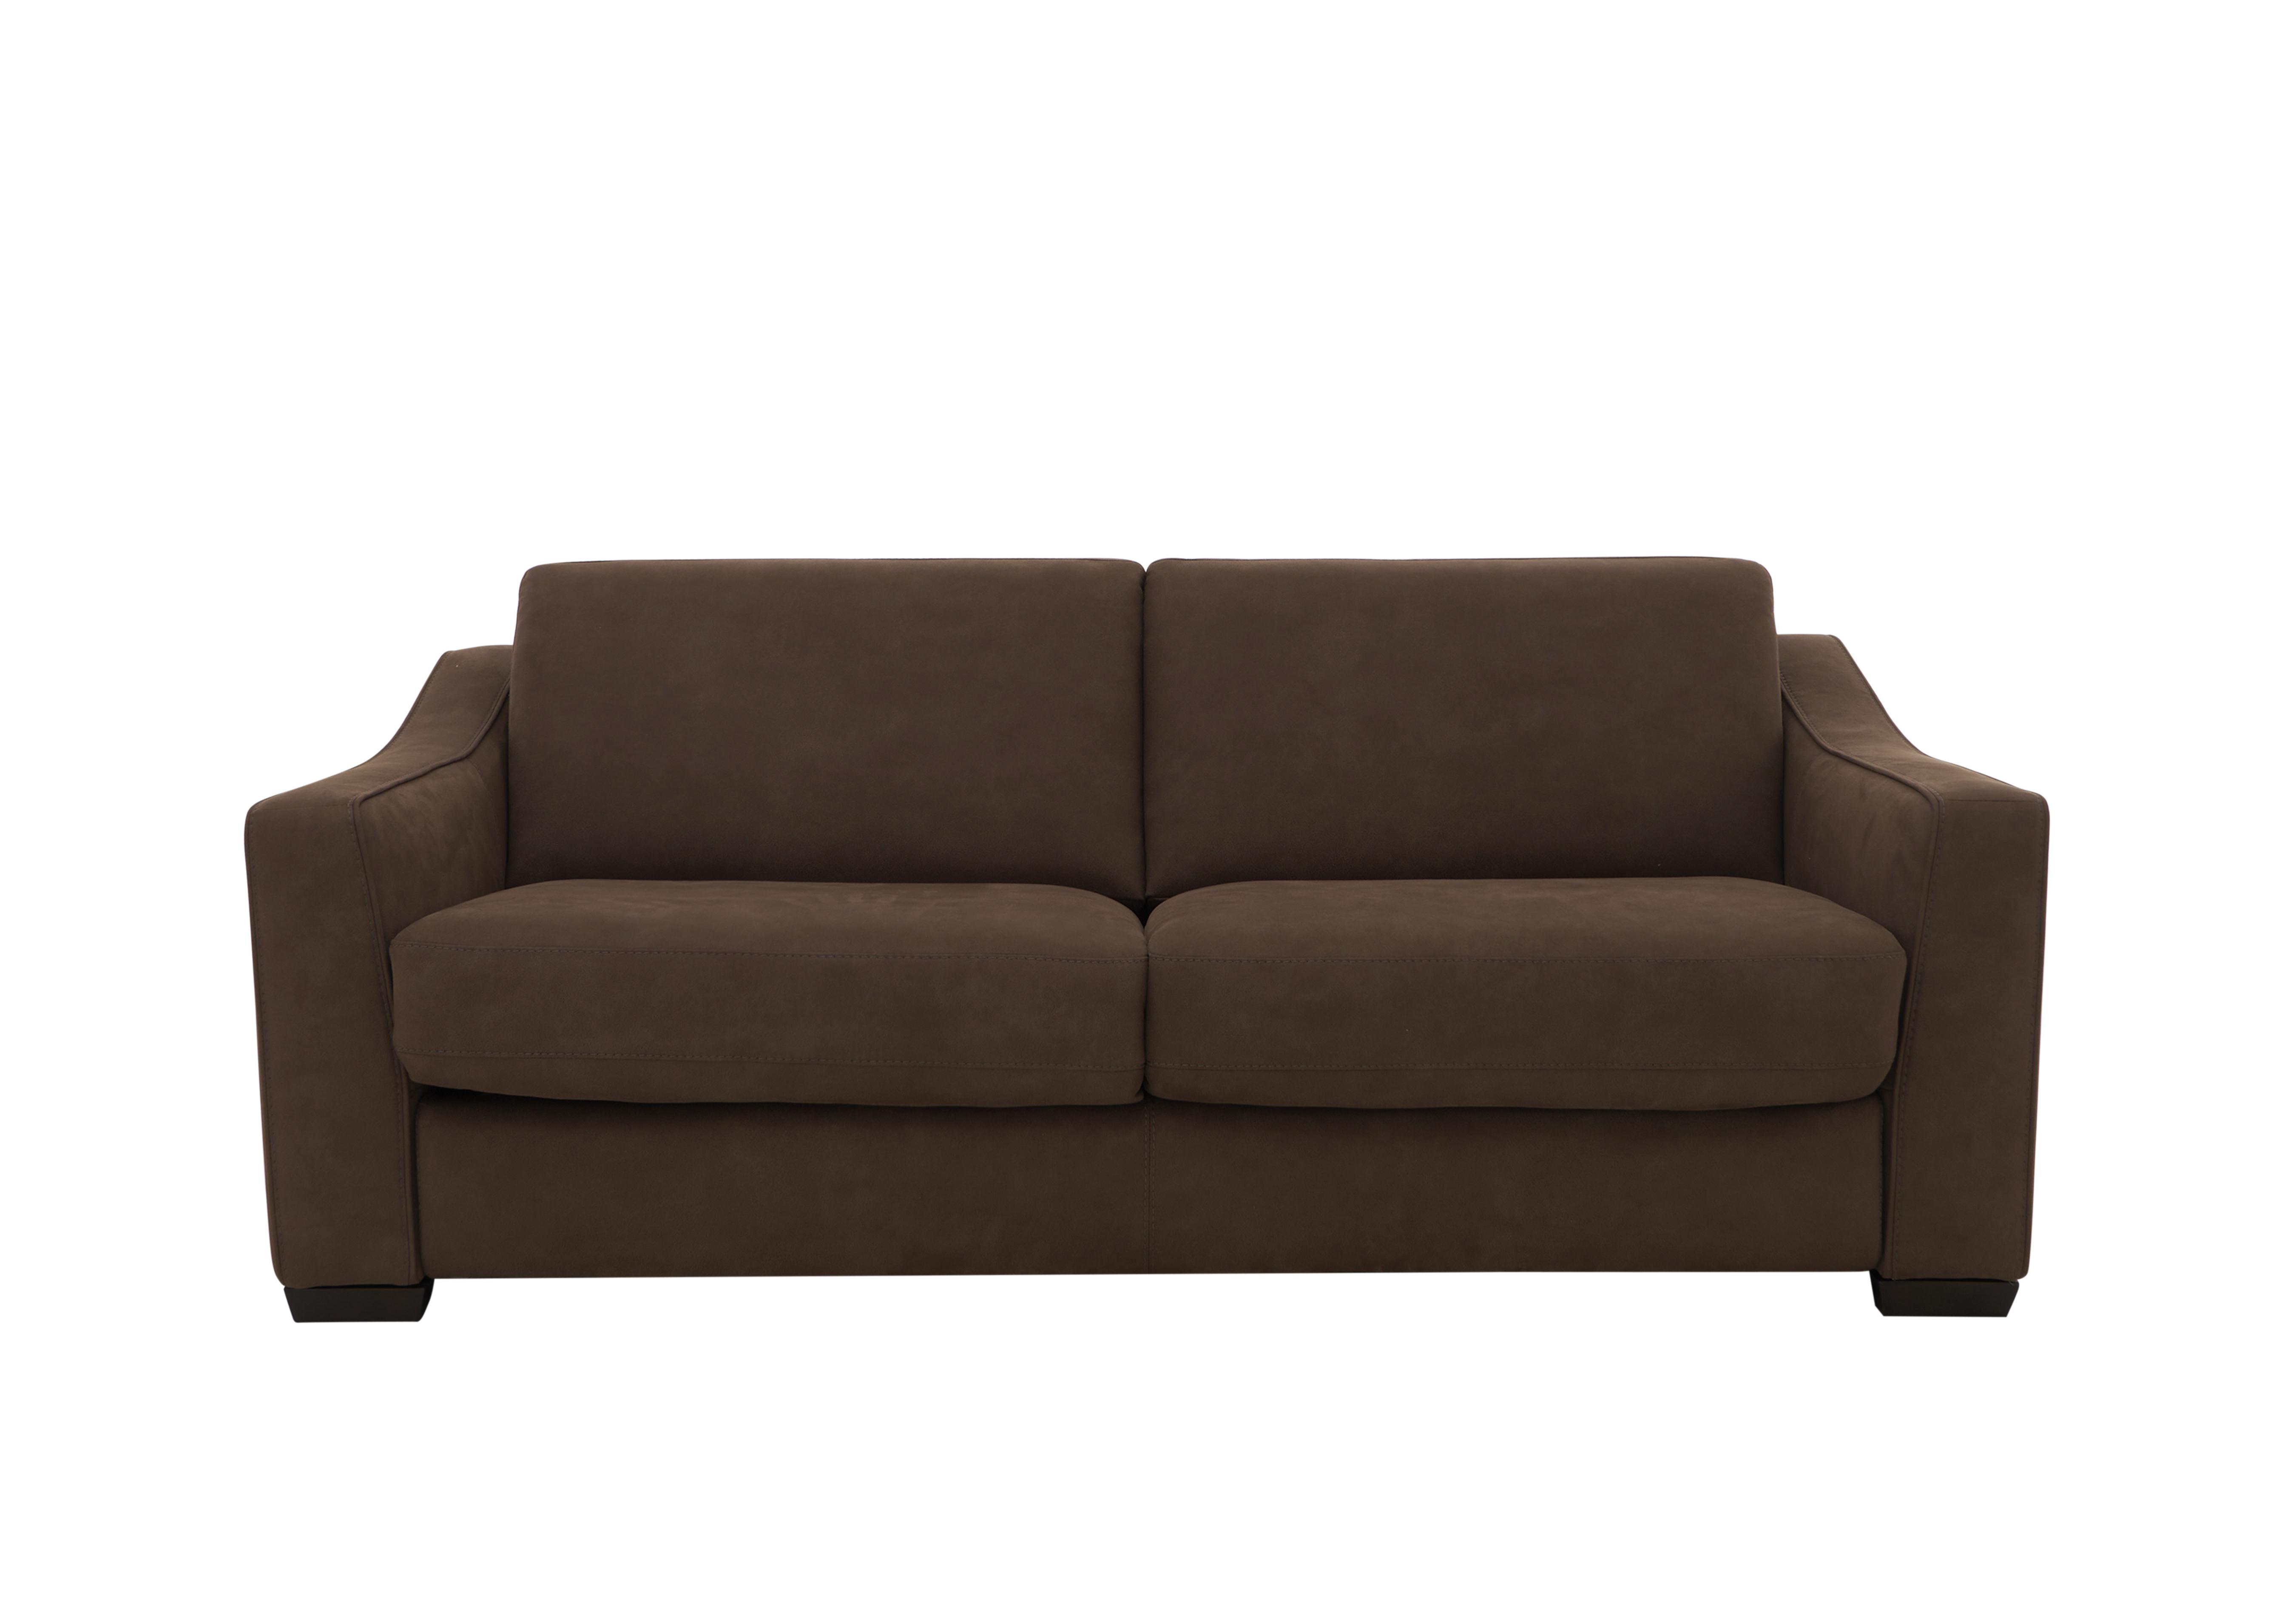 Optimus 3 Seater Fabric Sofa in Bfa-Blj-R05 Hazelnut on Furniture Village